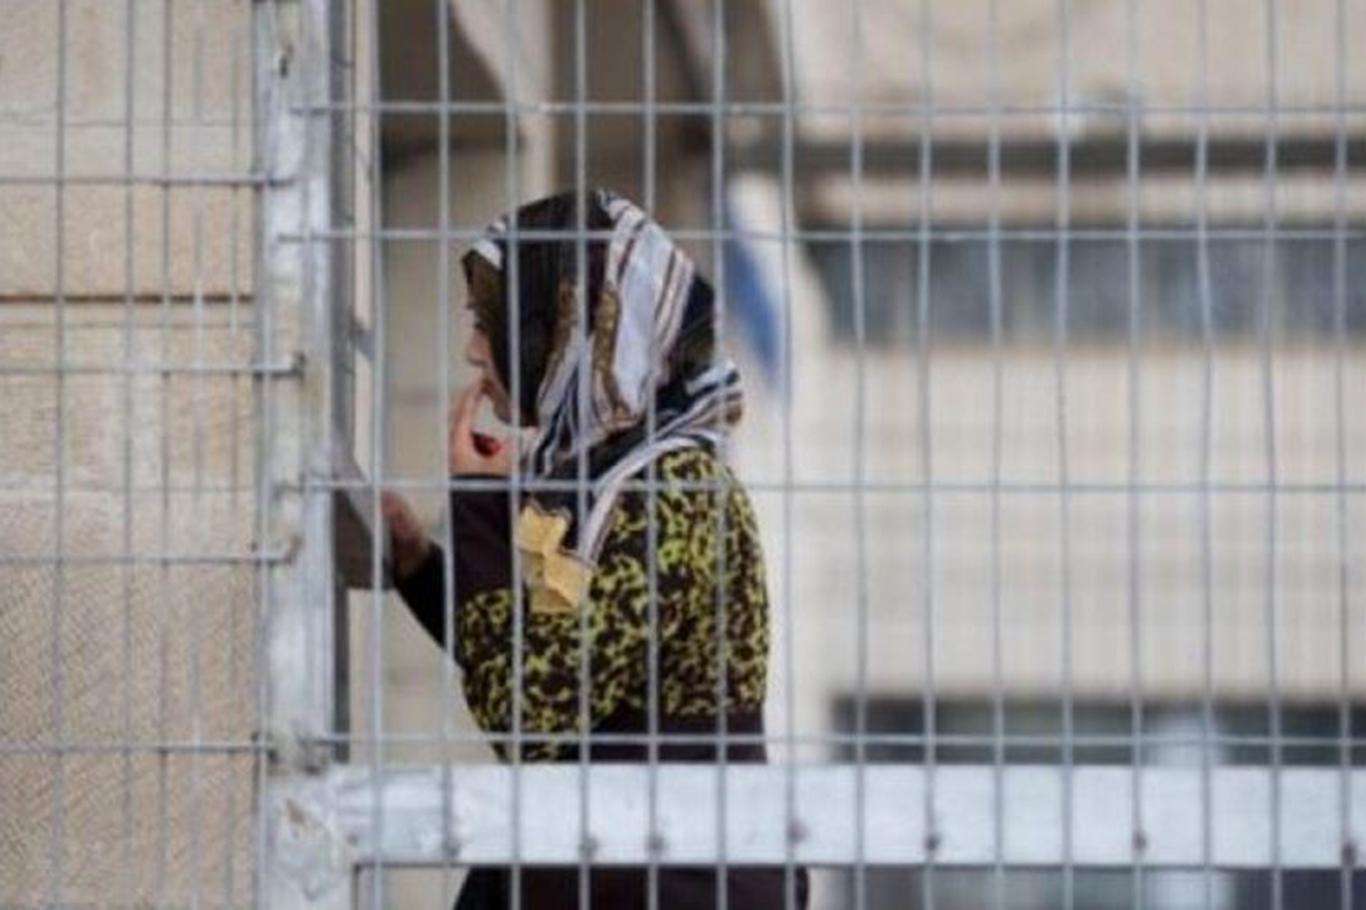 Three Palestinian female prisoners on hunger strike